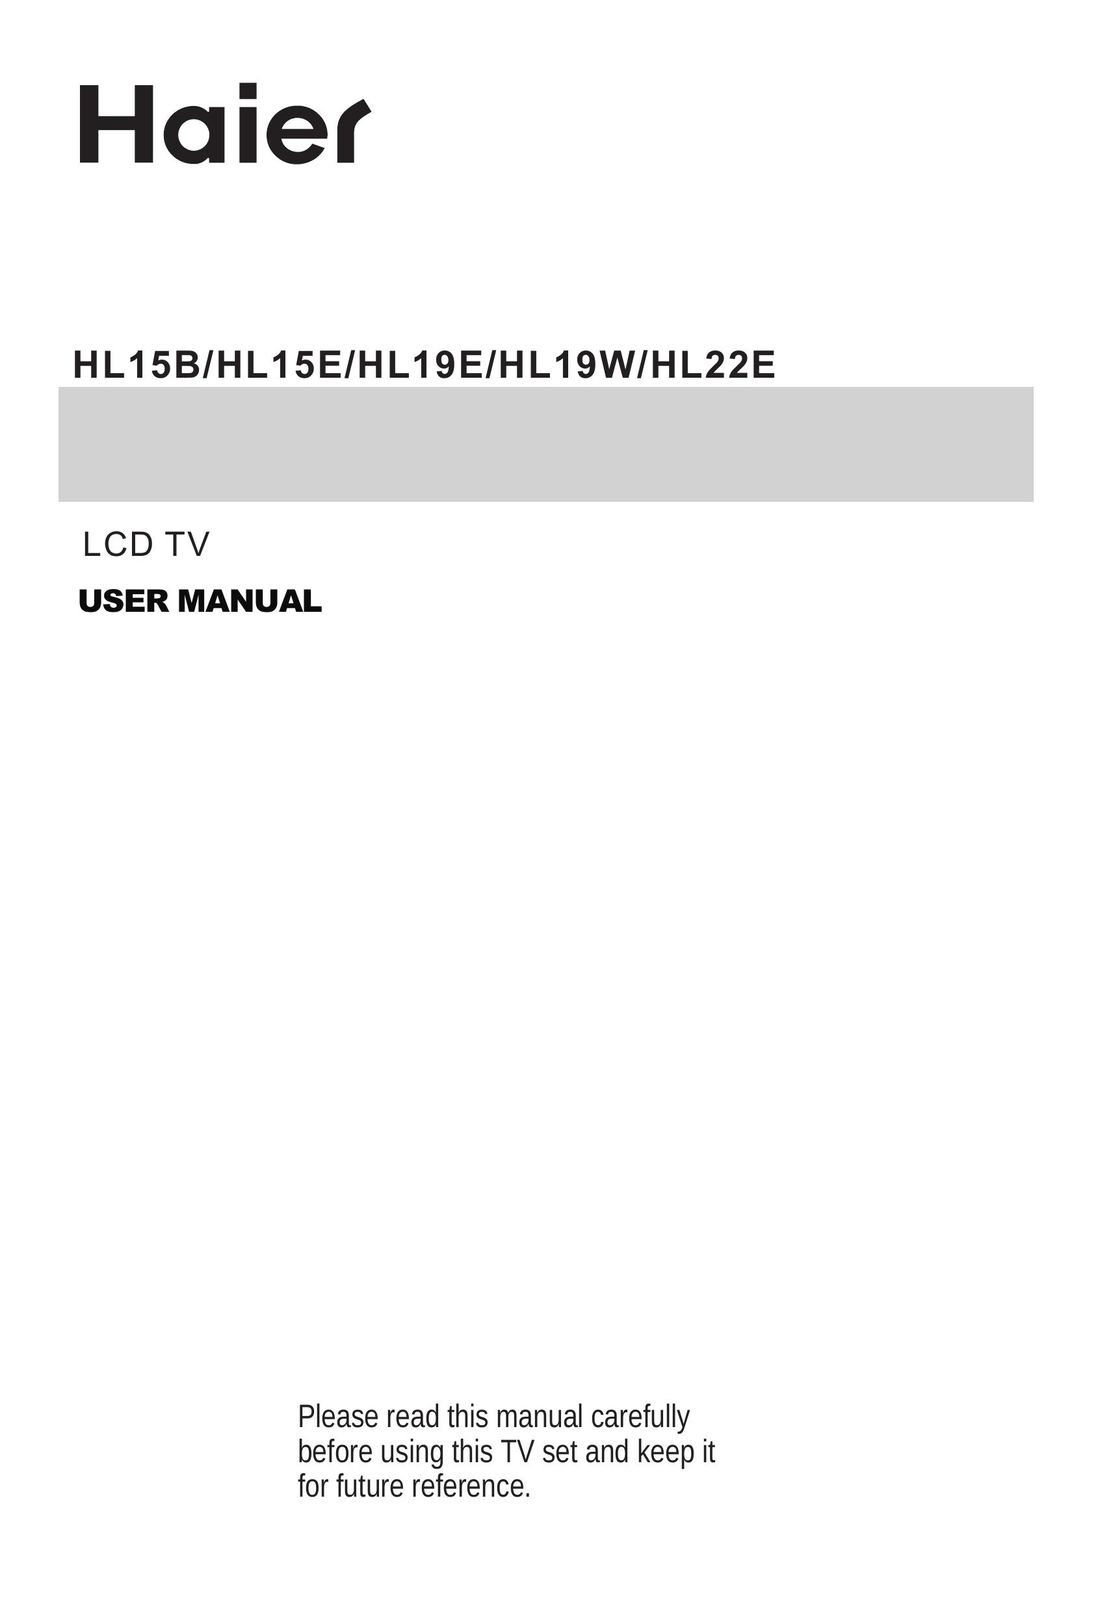 Haier HL15B Flat Panel Television User Manual